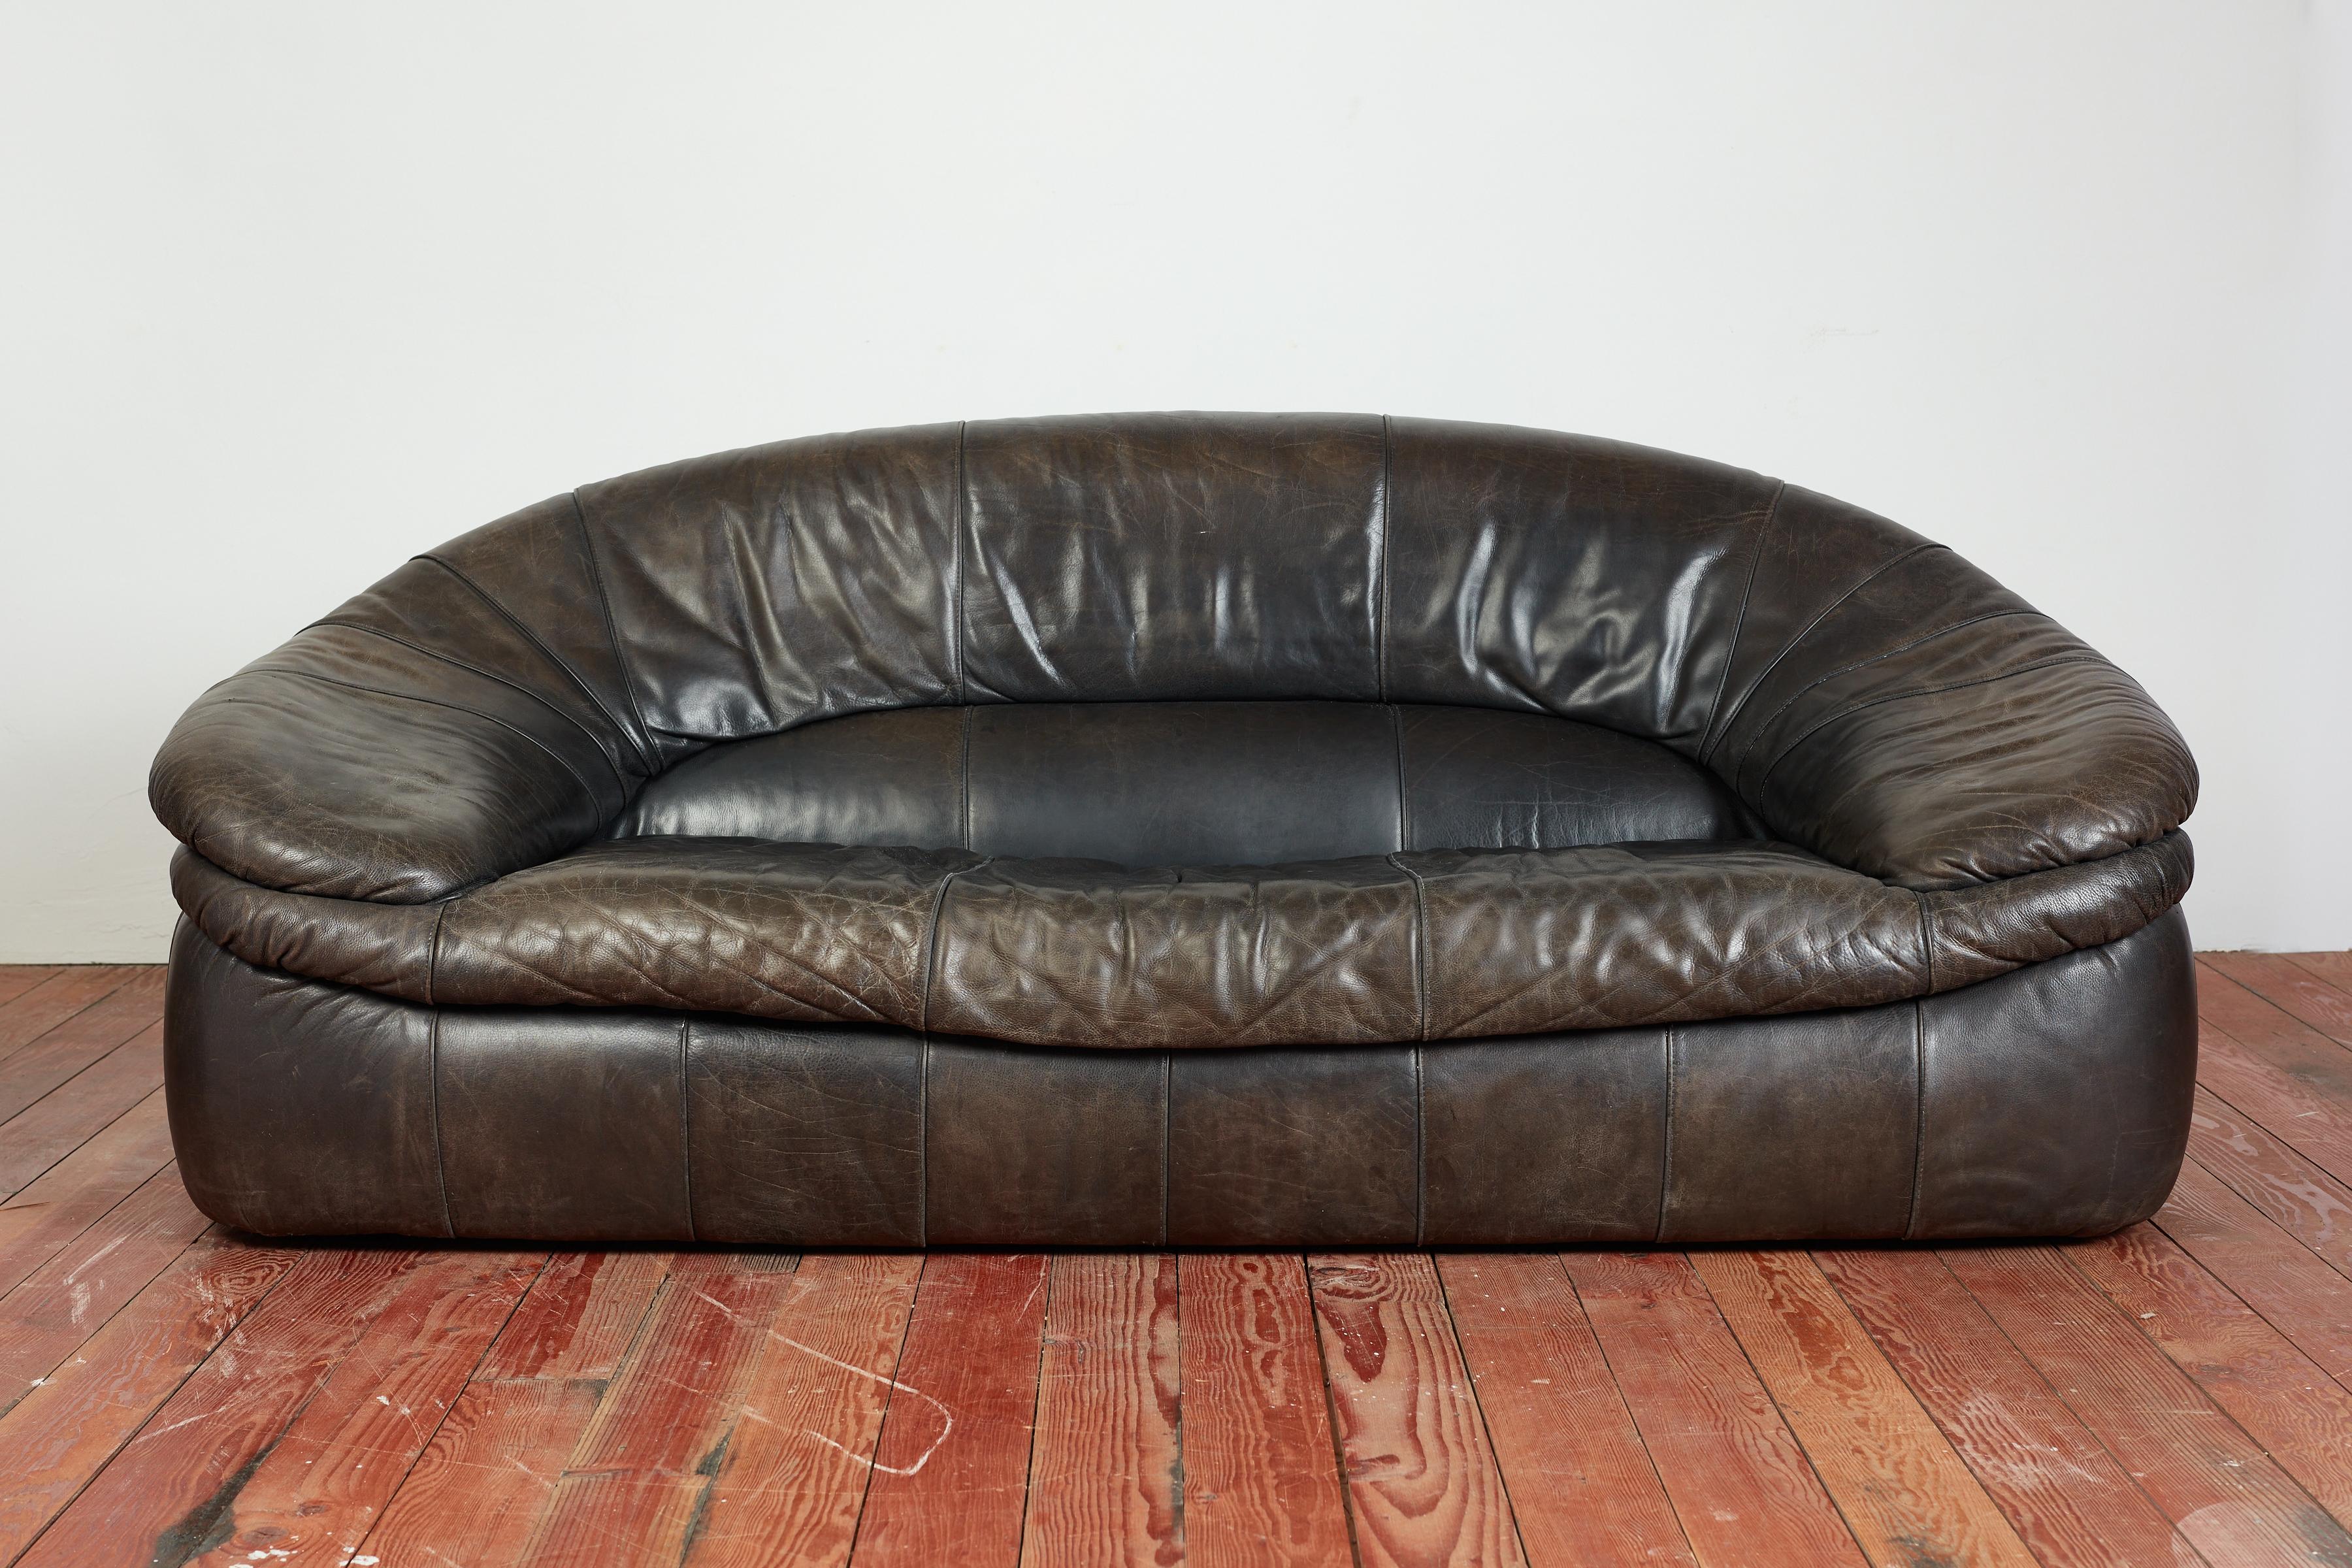 1970's Italian leather sofa with wonderful shape and patina 
